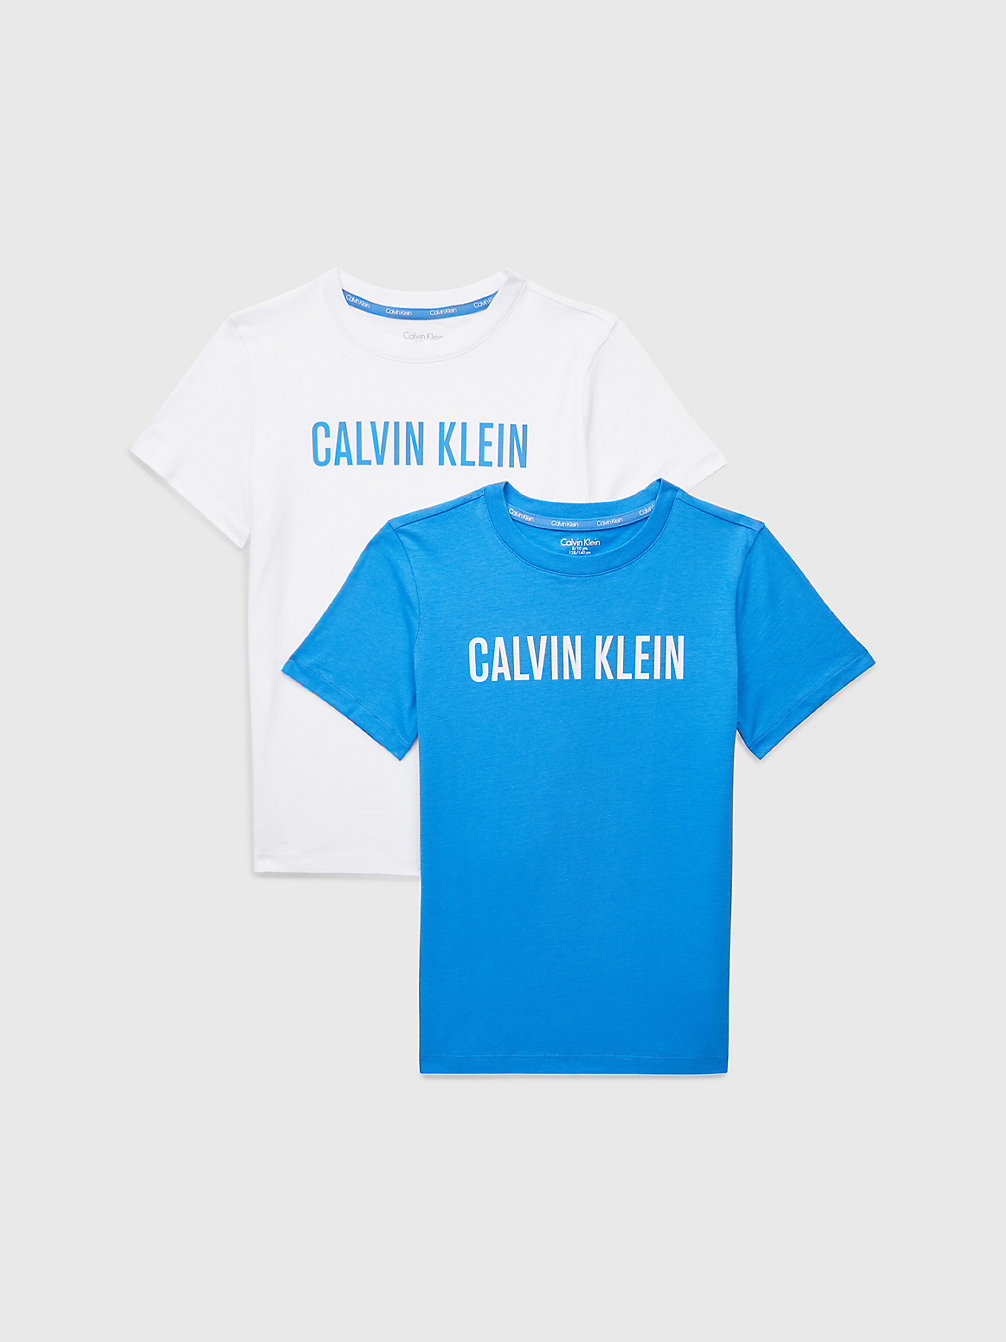 ELECTRICAQUA/PVHWHITE 2er-Pack Jungen-T-Shirts – Intense Power undefined Jungen Calvin Klein